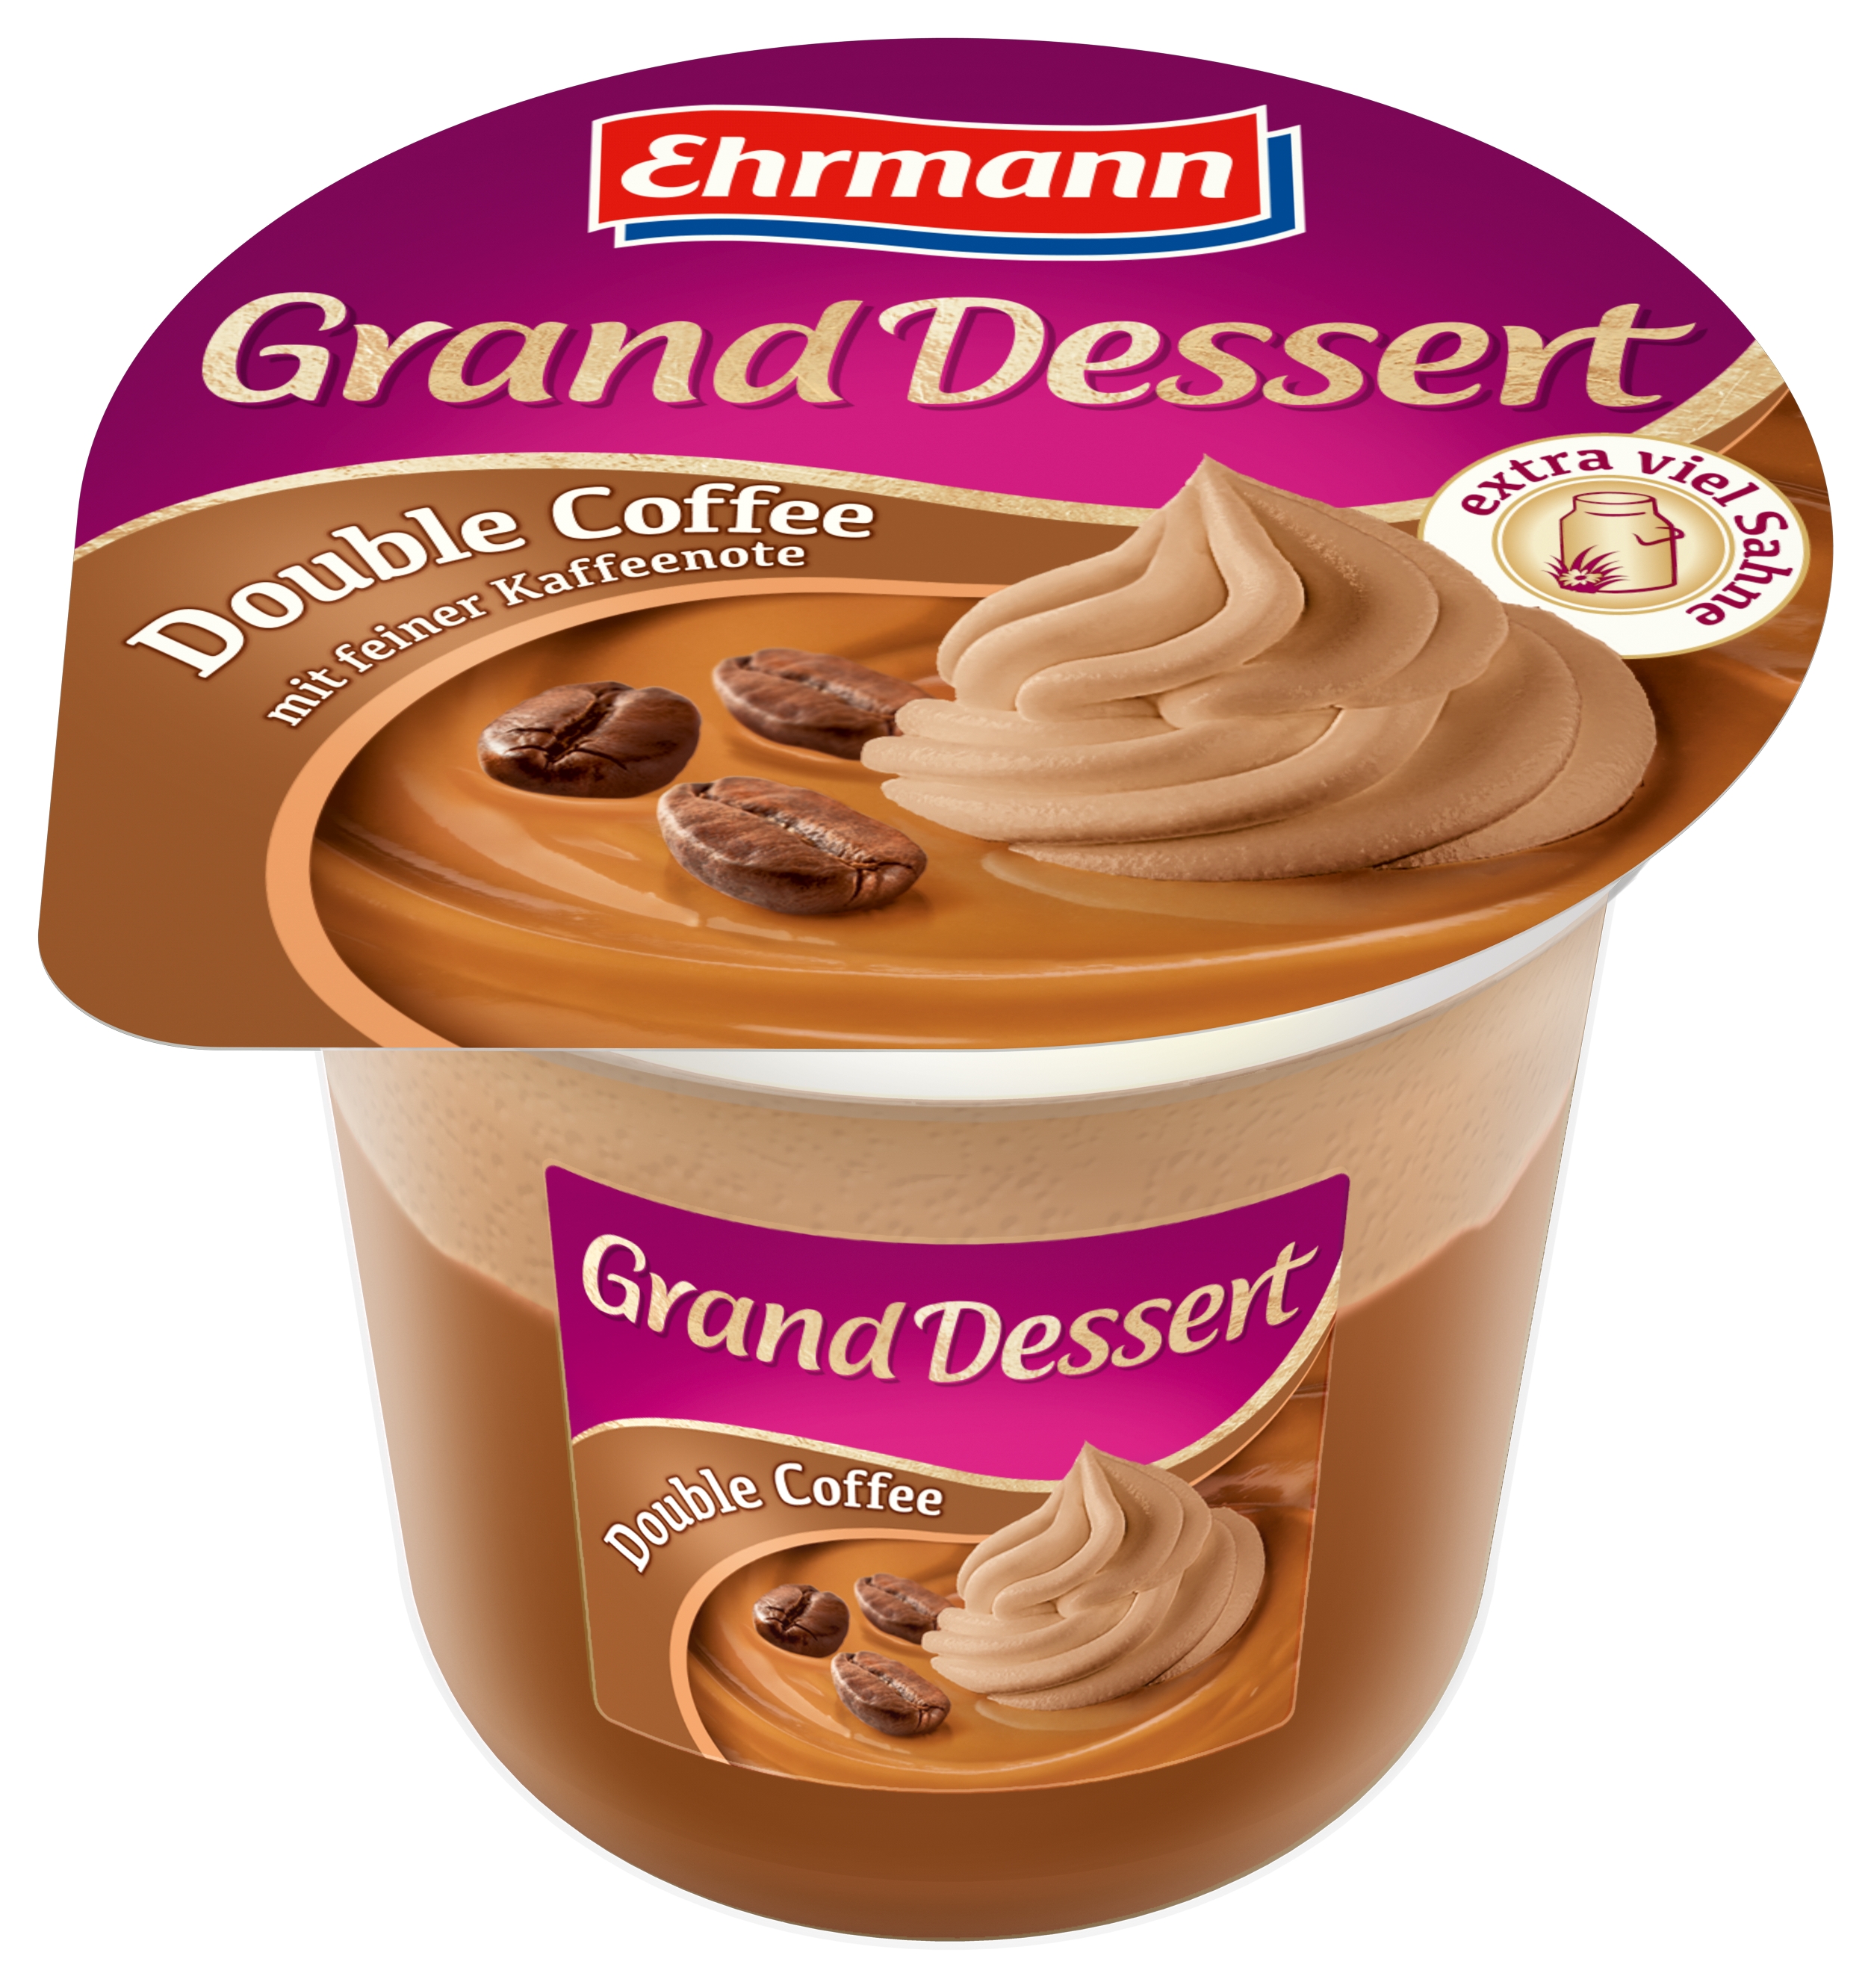 Шоколад grand. Эрманн Гранд десерт. Пудинг Ehrmann Grand Dessert. Десерт Эрманн Гранд шоколад. Ehrmann Grand Dessert двойной орех.